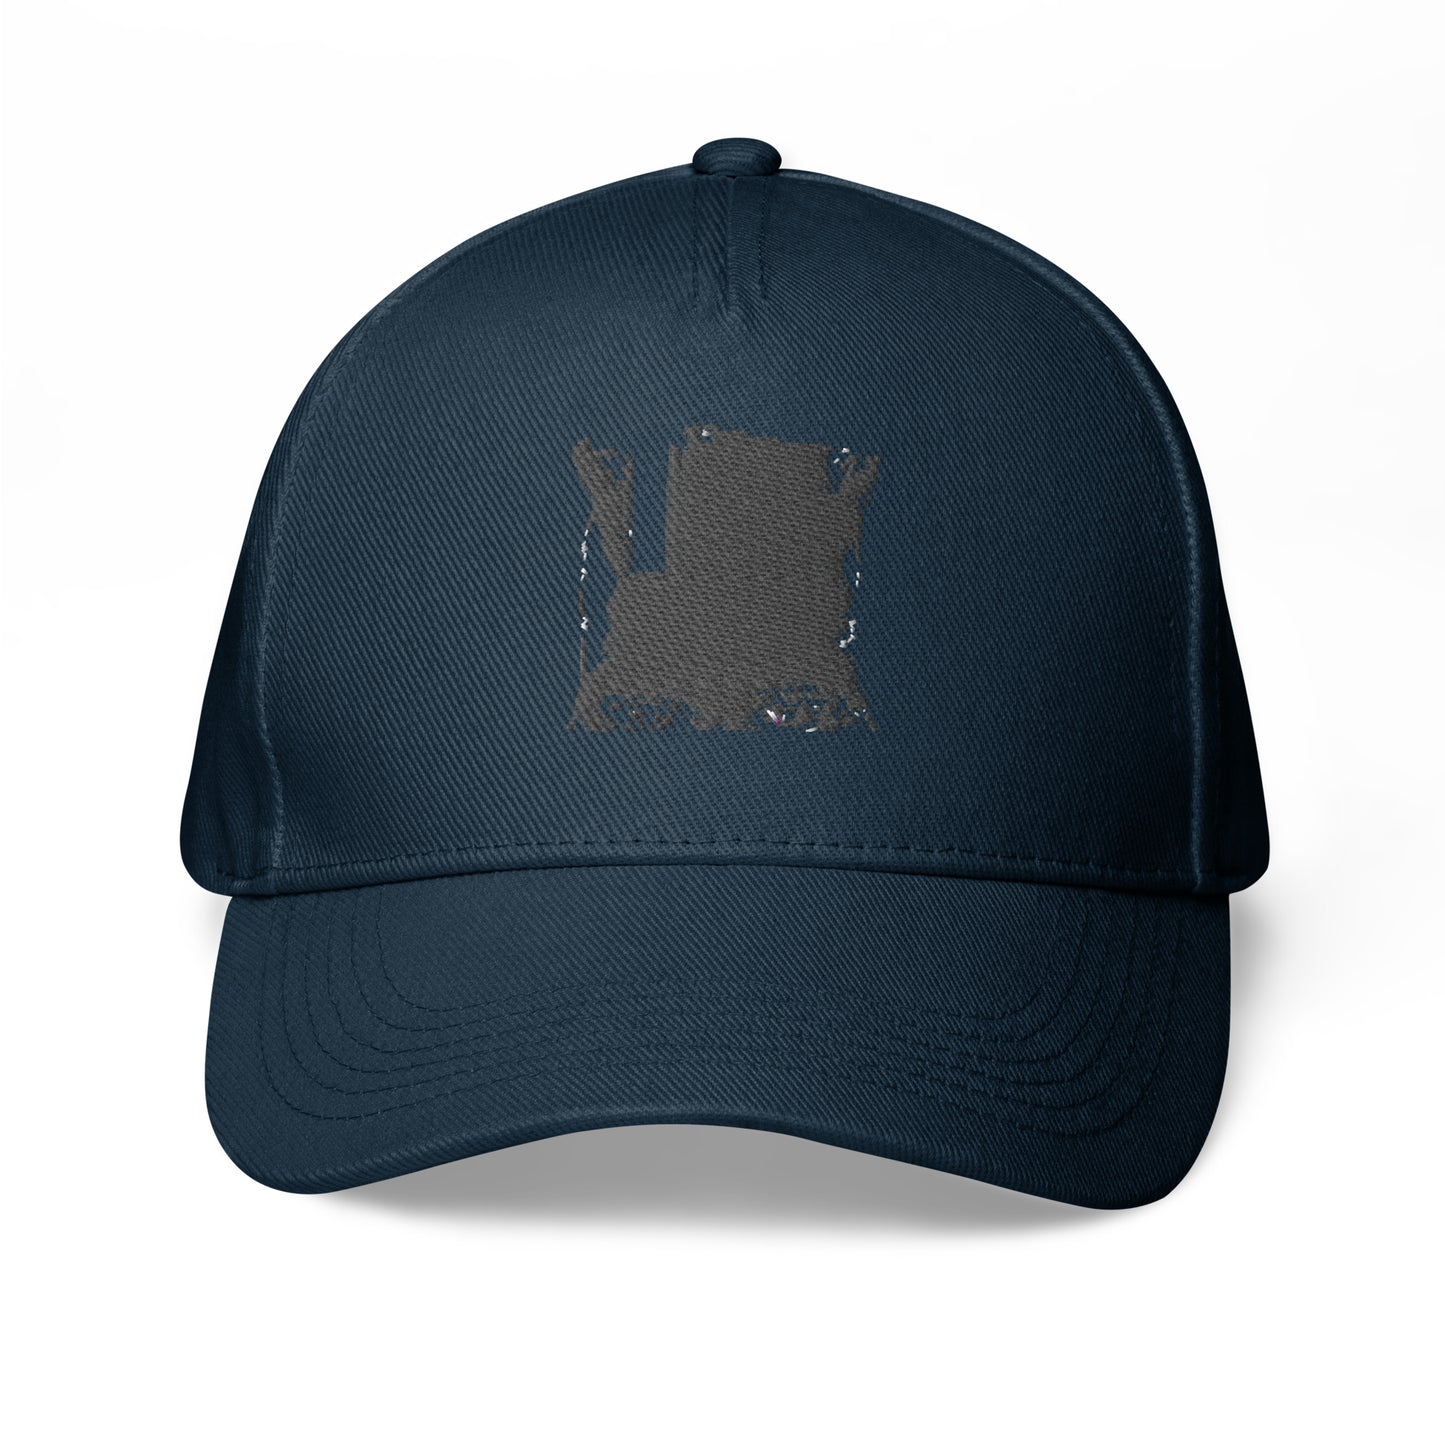 Freedom Classic baseball cap